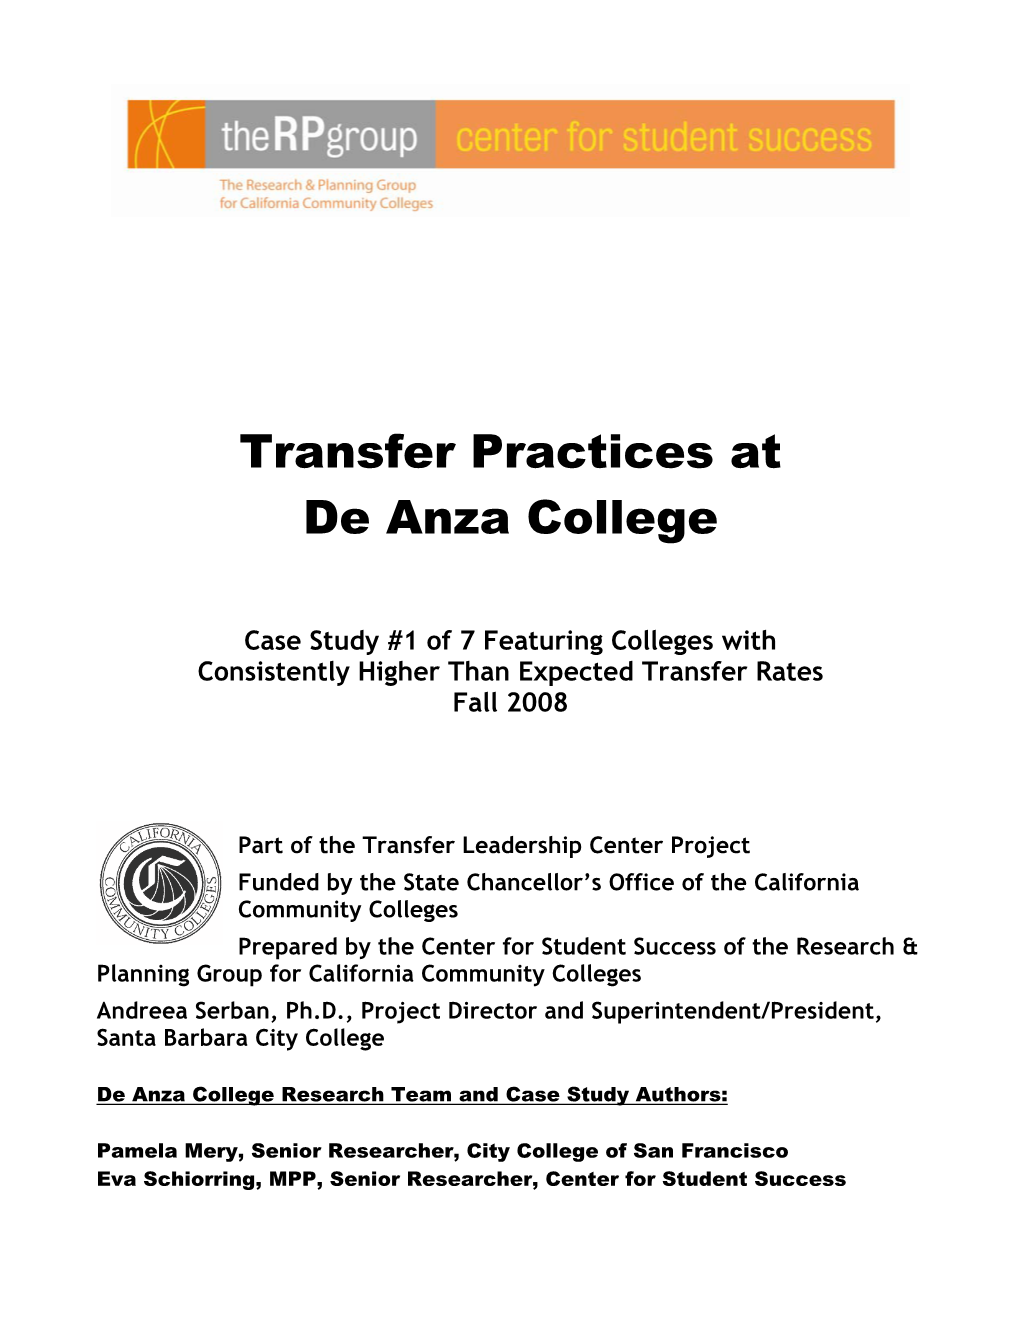 Transfer Practices at De Anza College